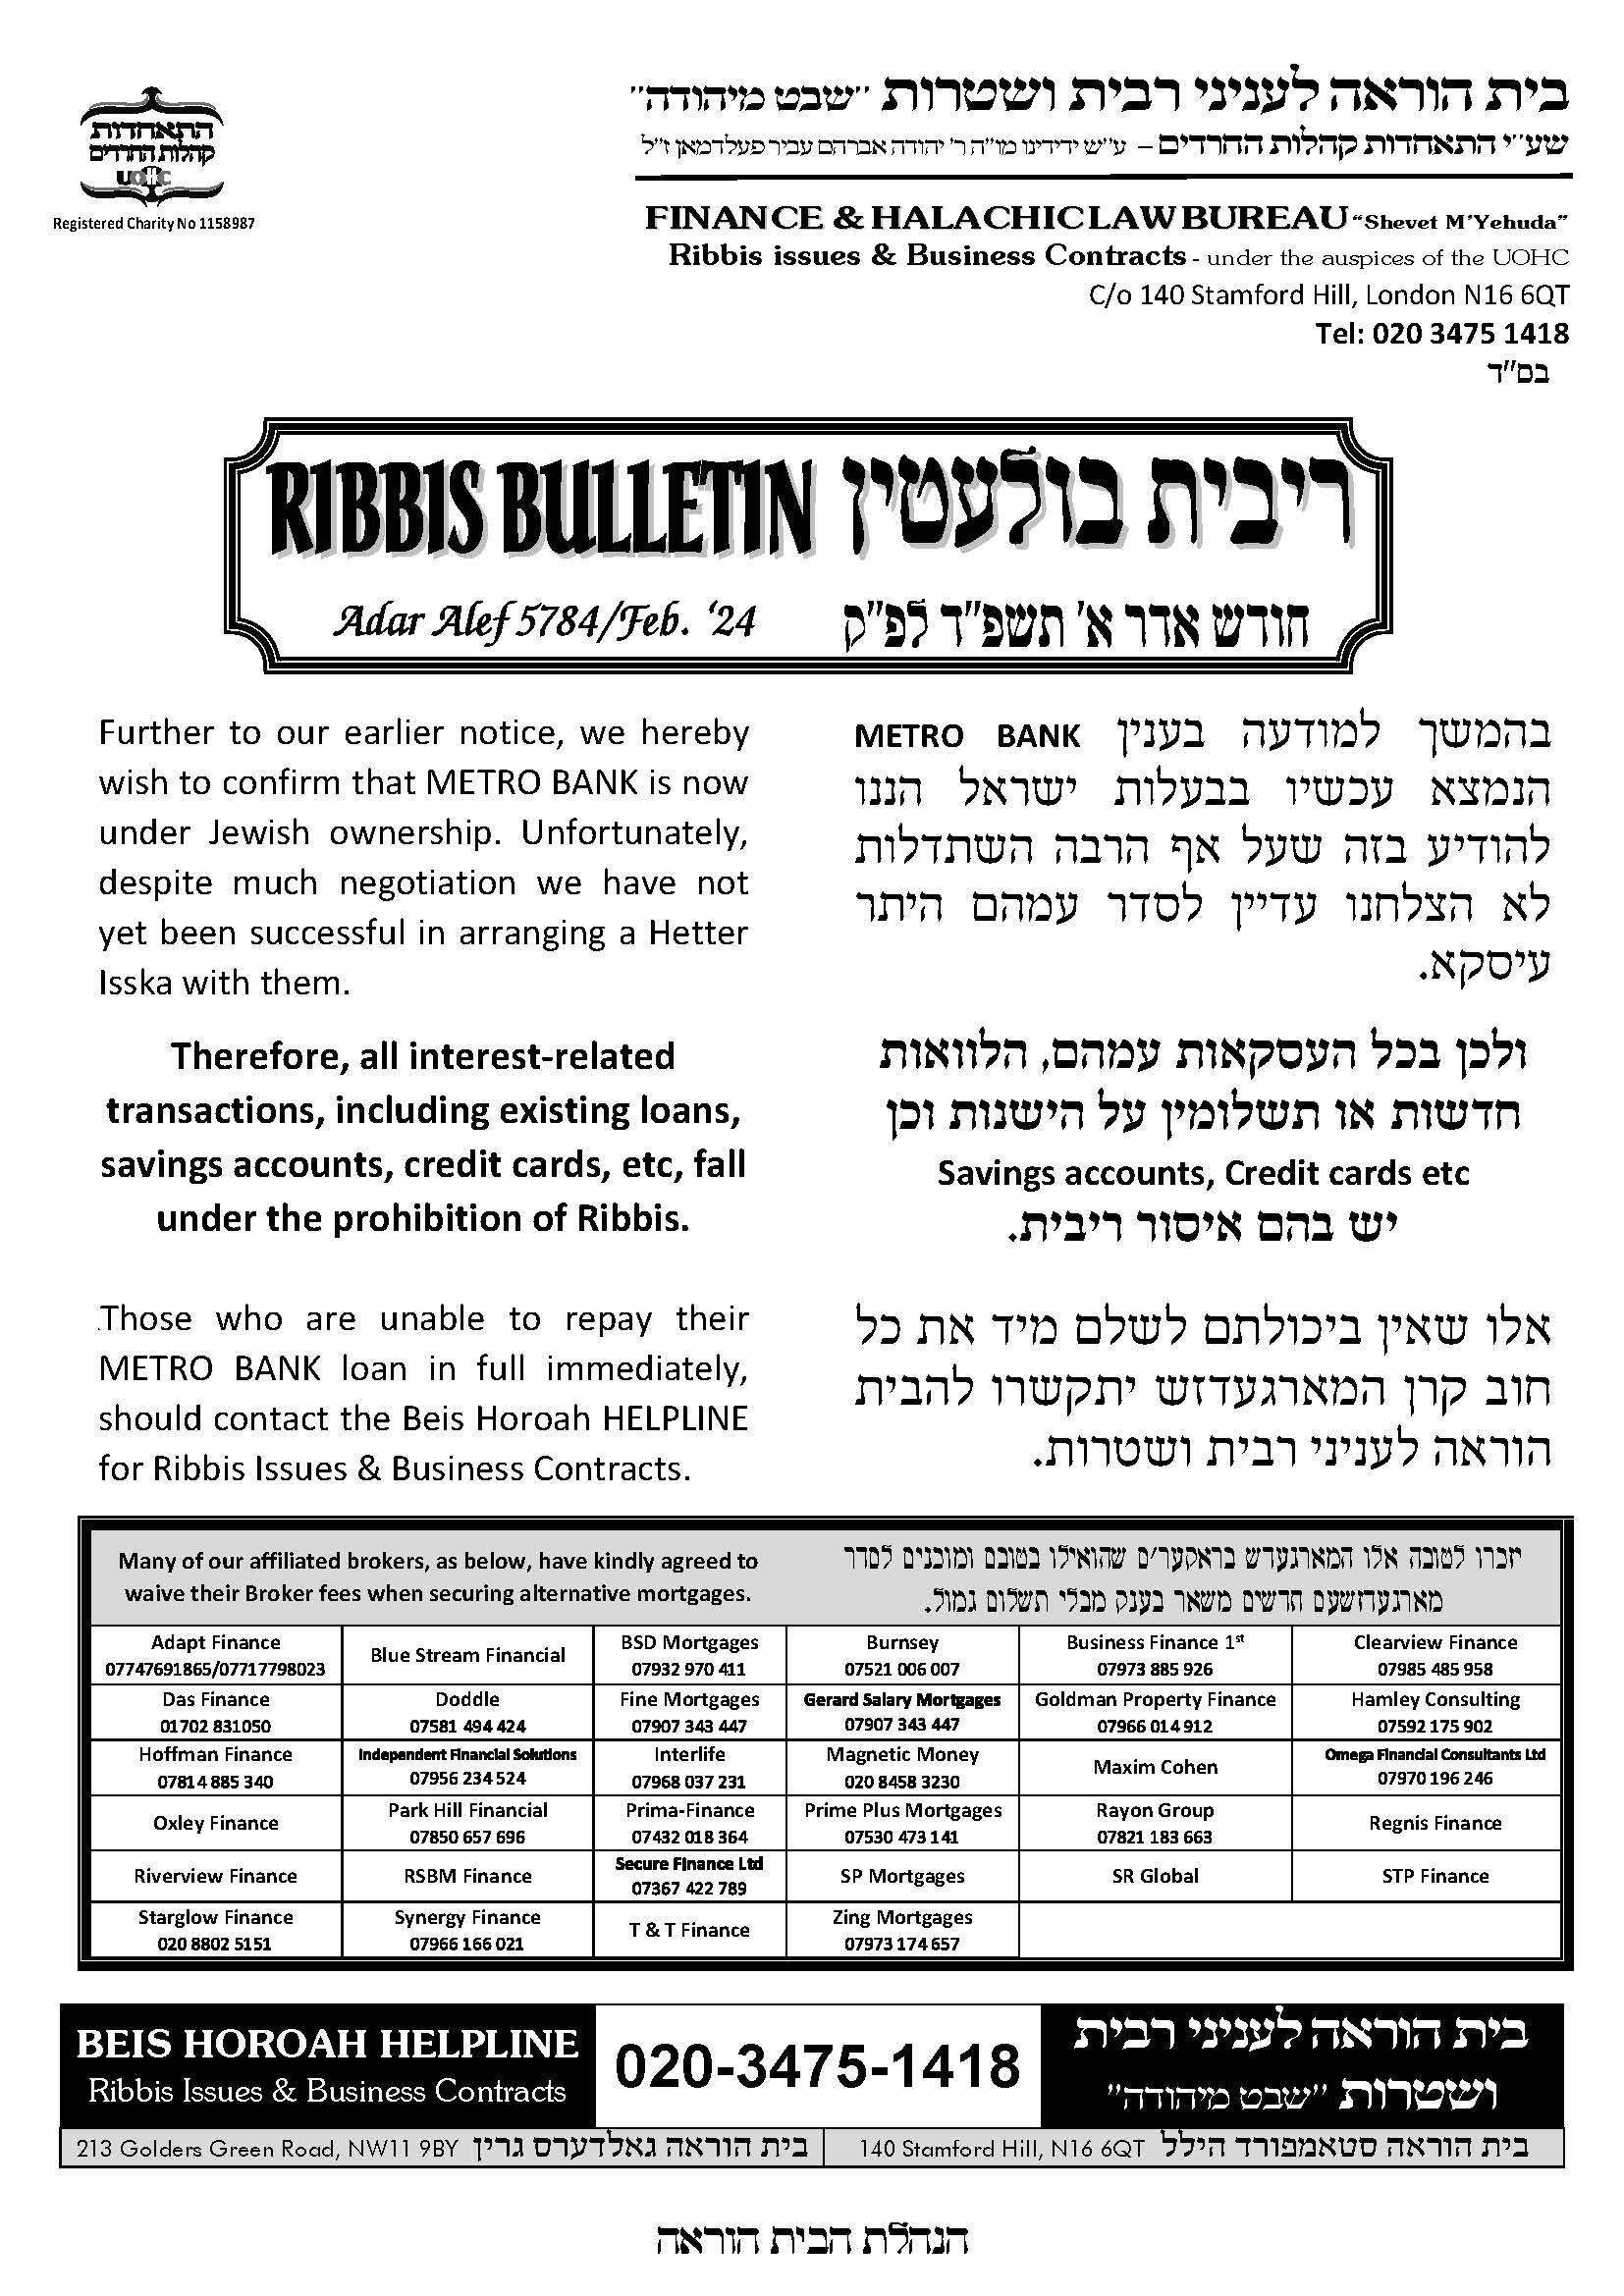 Ribbis Bulletin for Public Feb. '24 .jpg